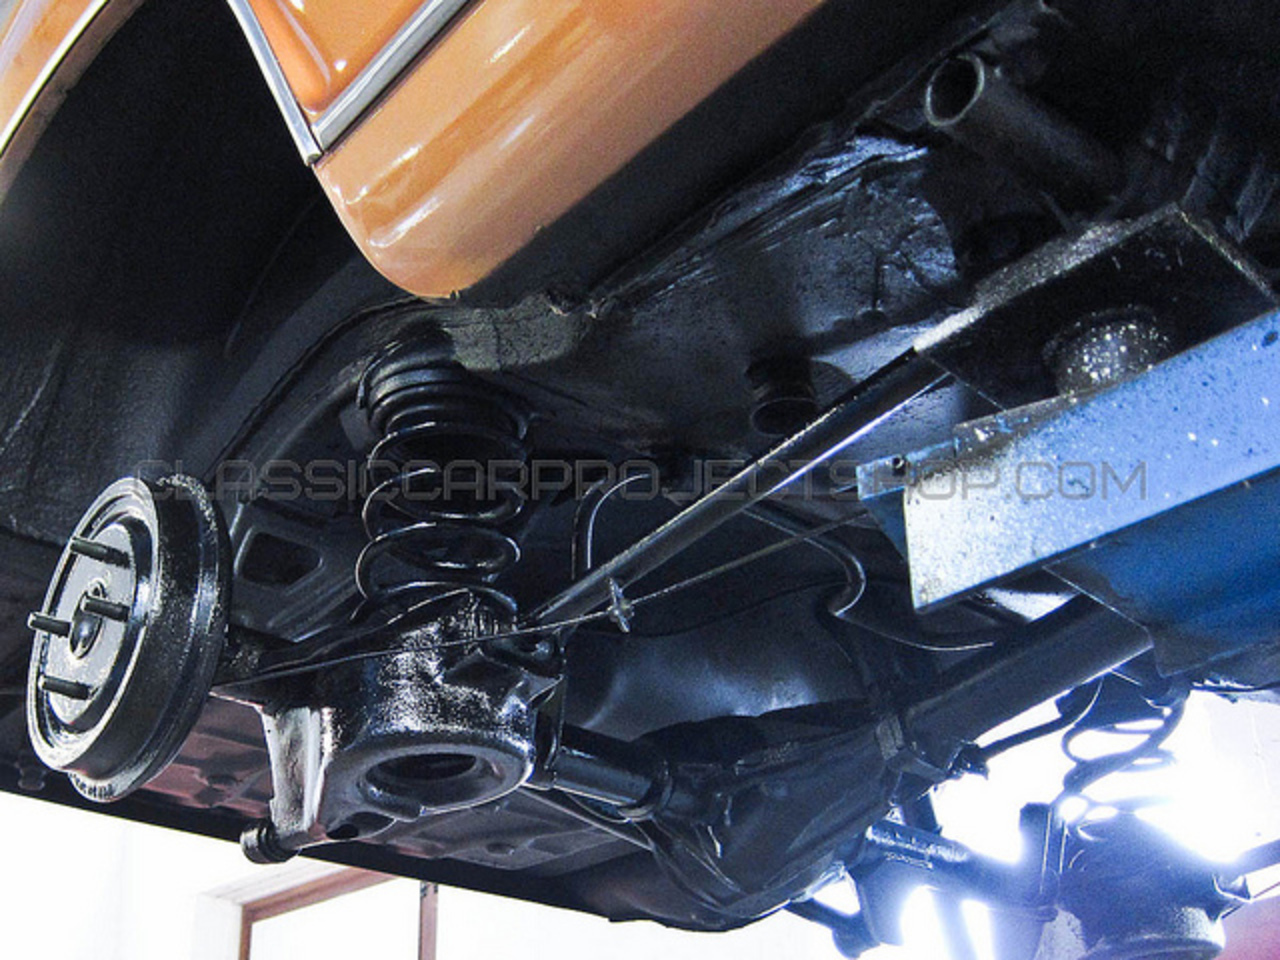 Opel Kadett Coupe - Underside Detail | Flickr - Photo Sharing!